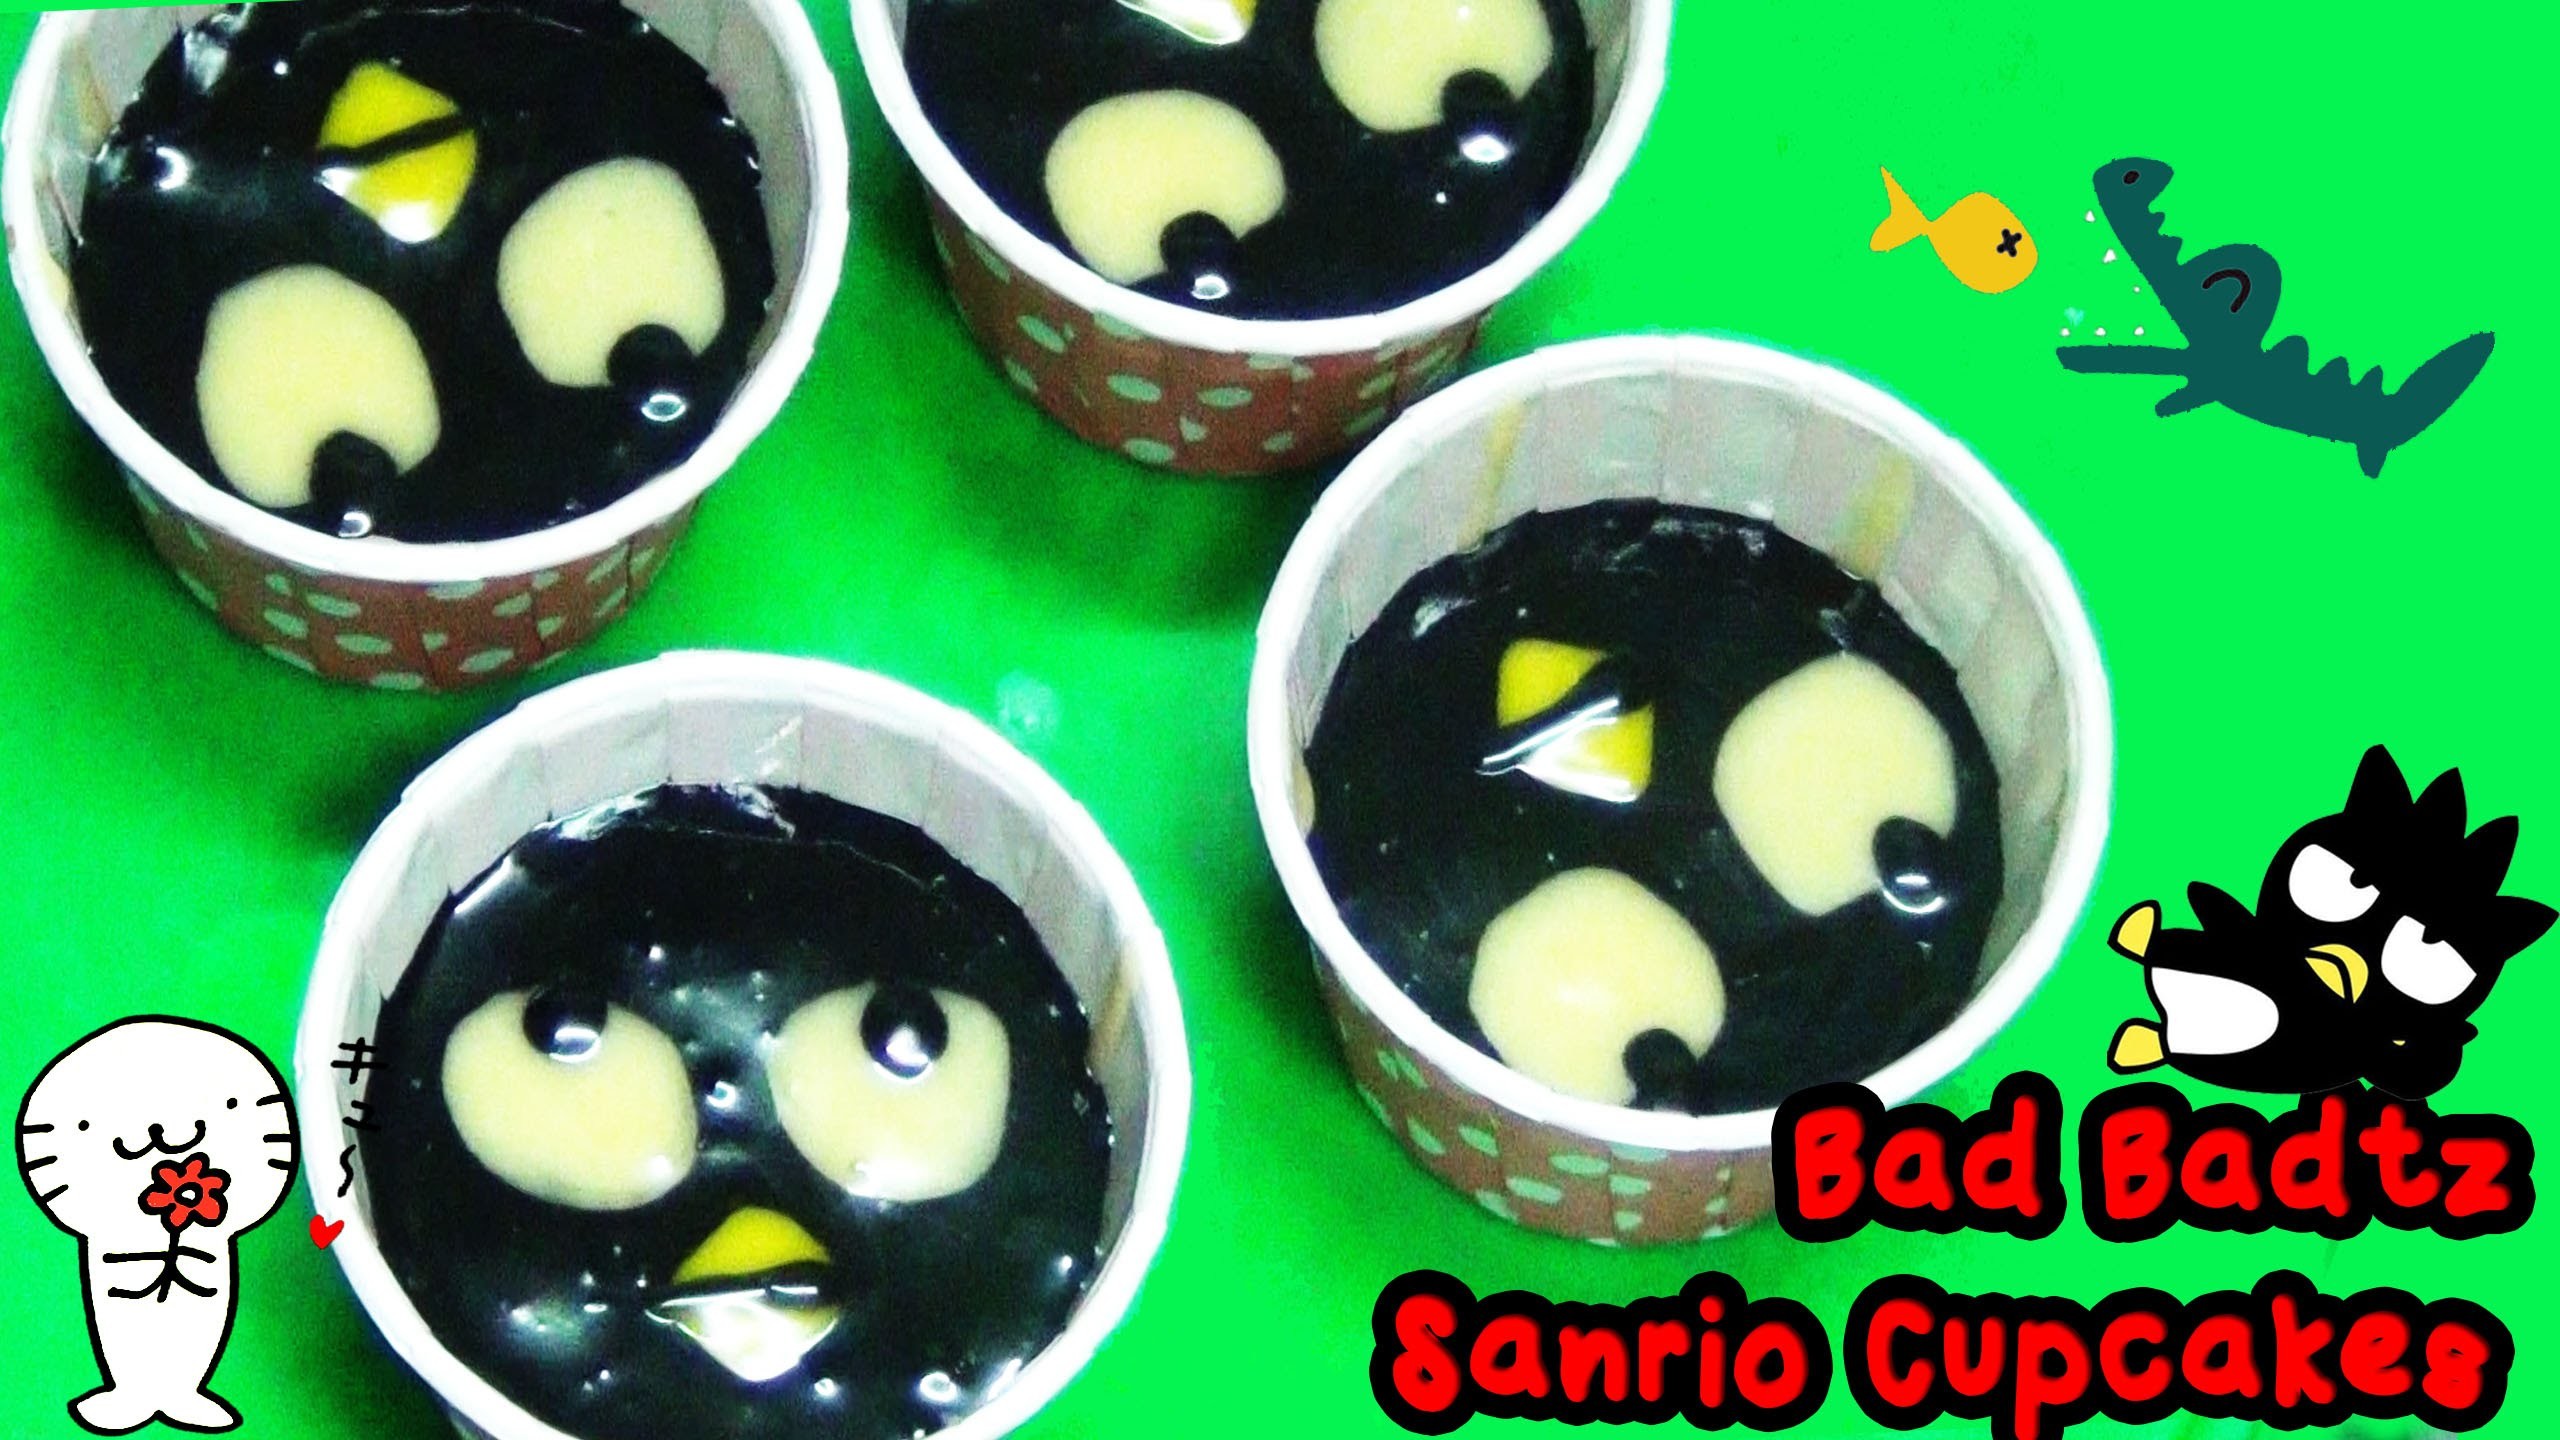 How To Make Hello Kitty Bad Badtz Maru Sanrio Cupcakes - Bad Badtz Maru - HD Wallpaper 